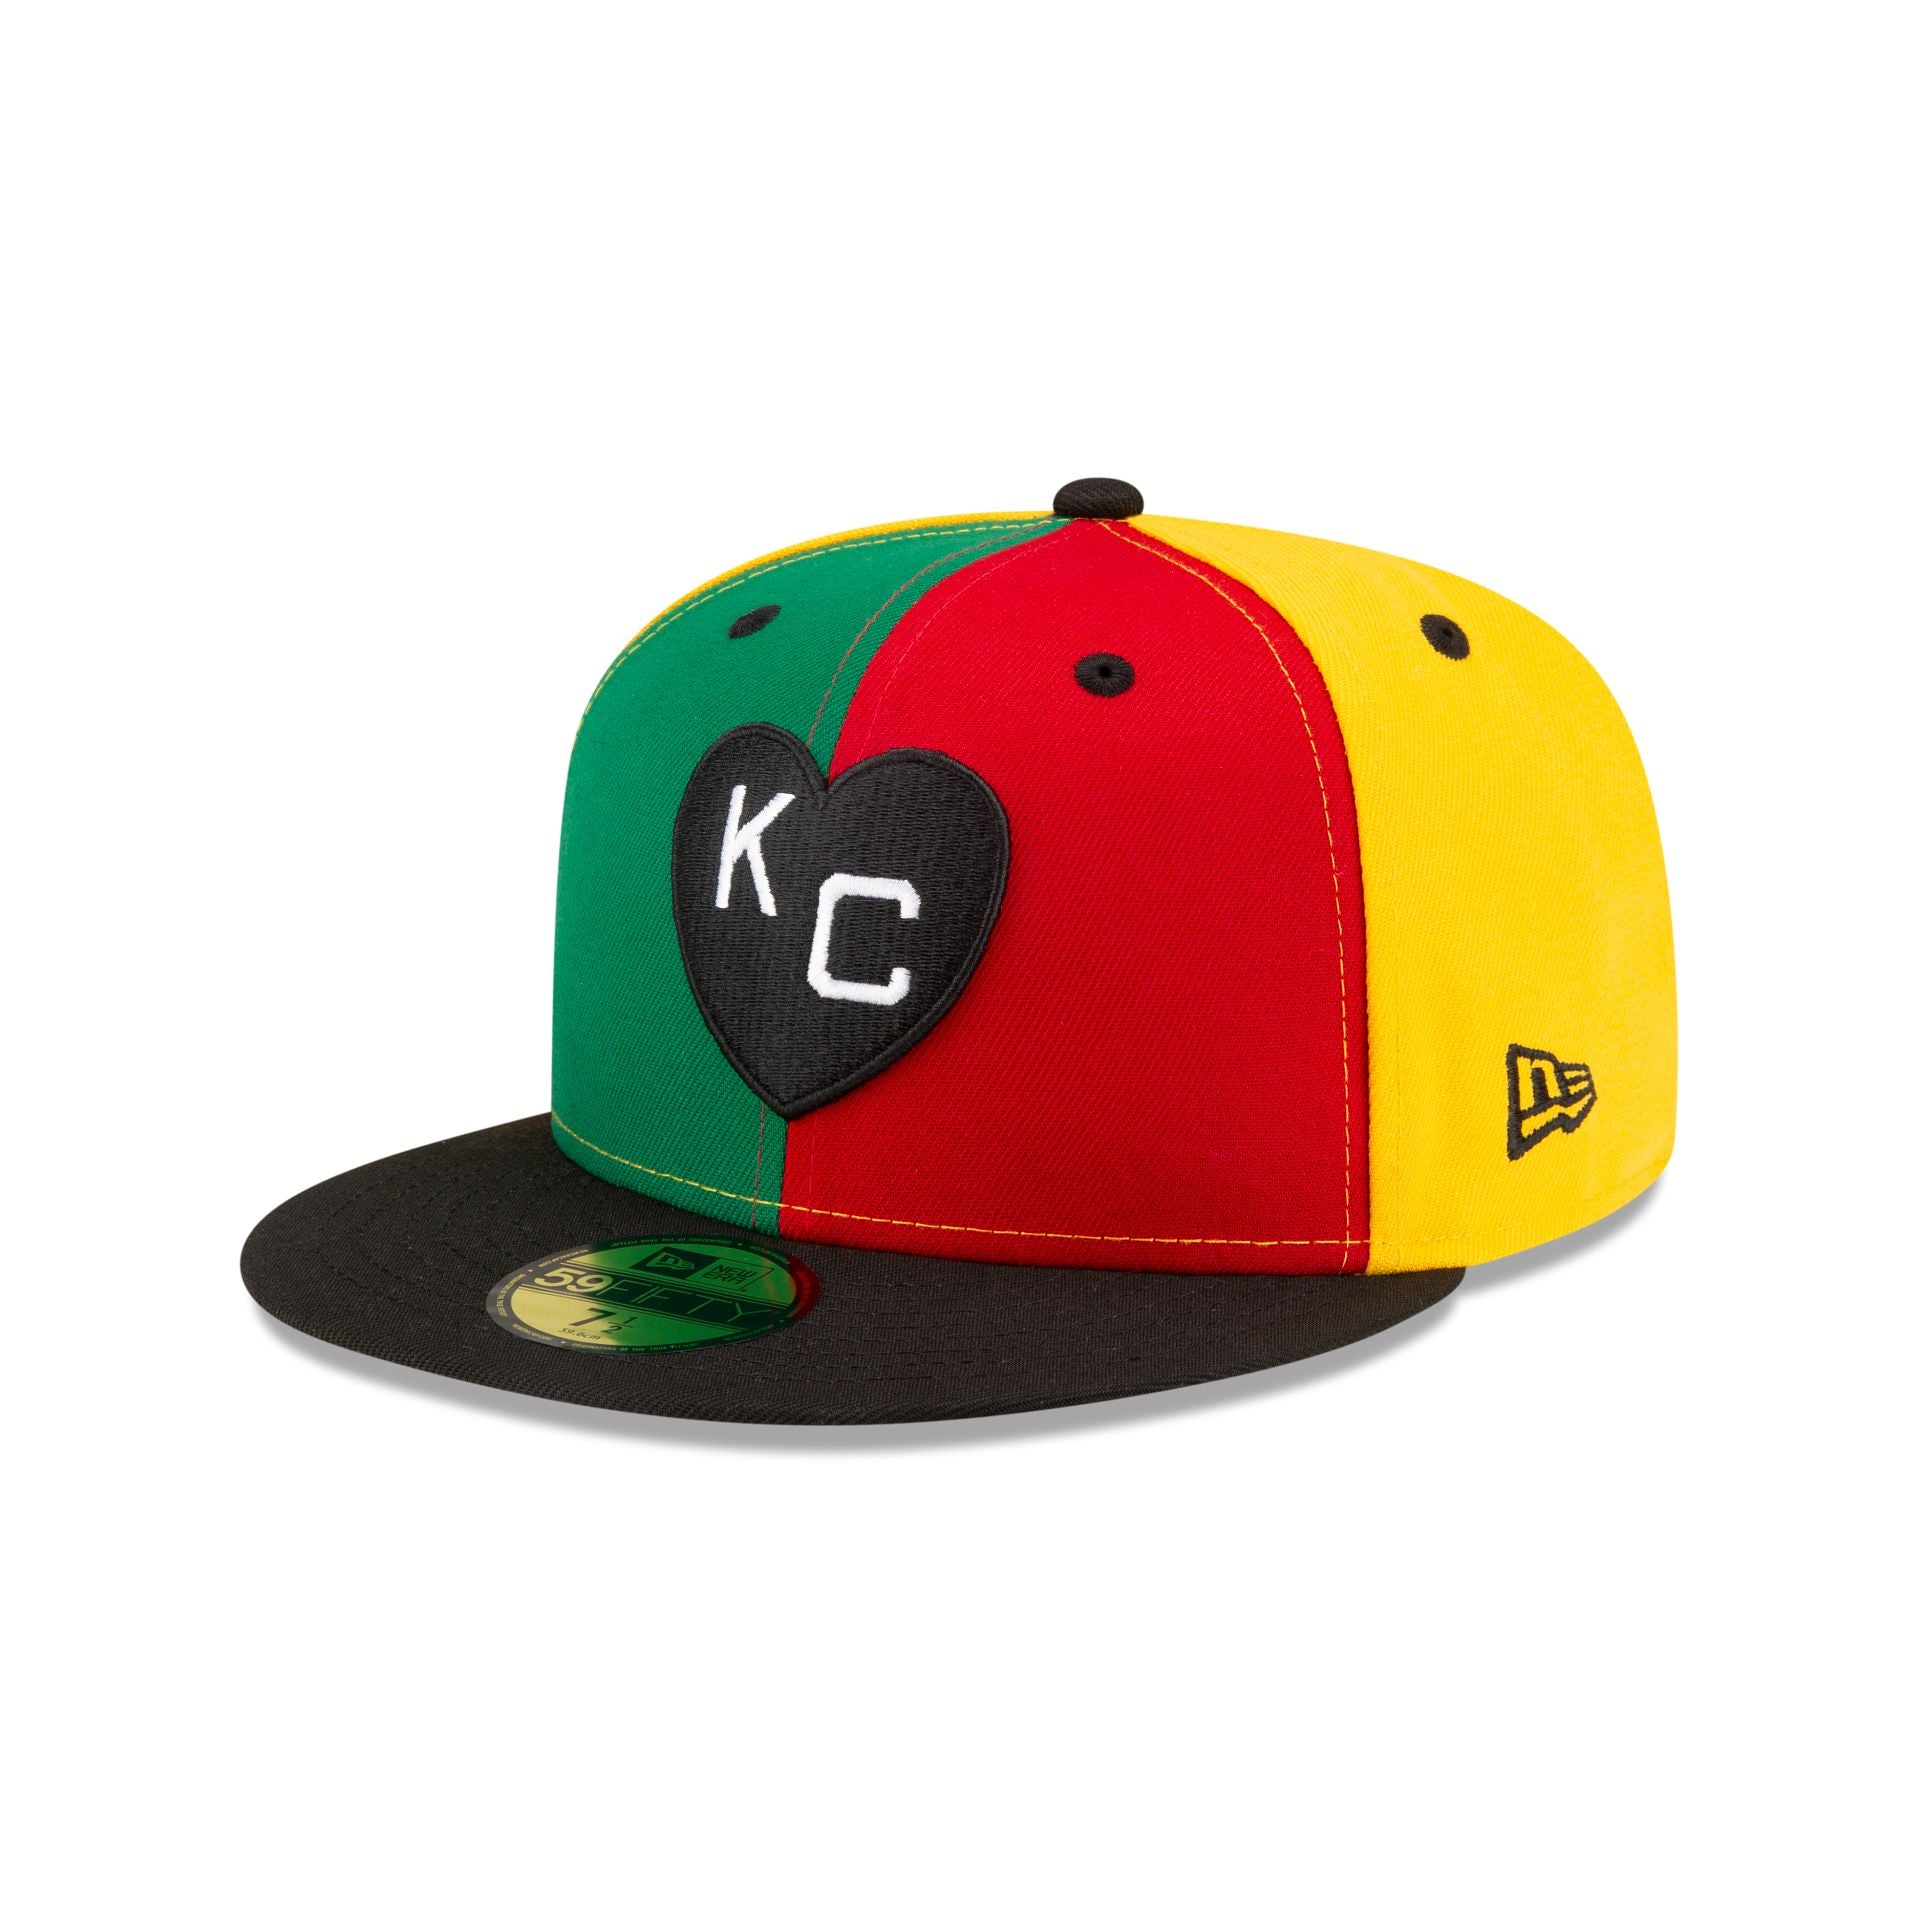 New Kansas City Kingdom Baseball Cap beach hat fishing hat Hats